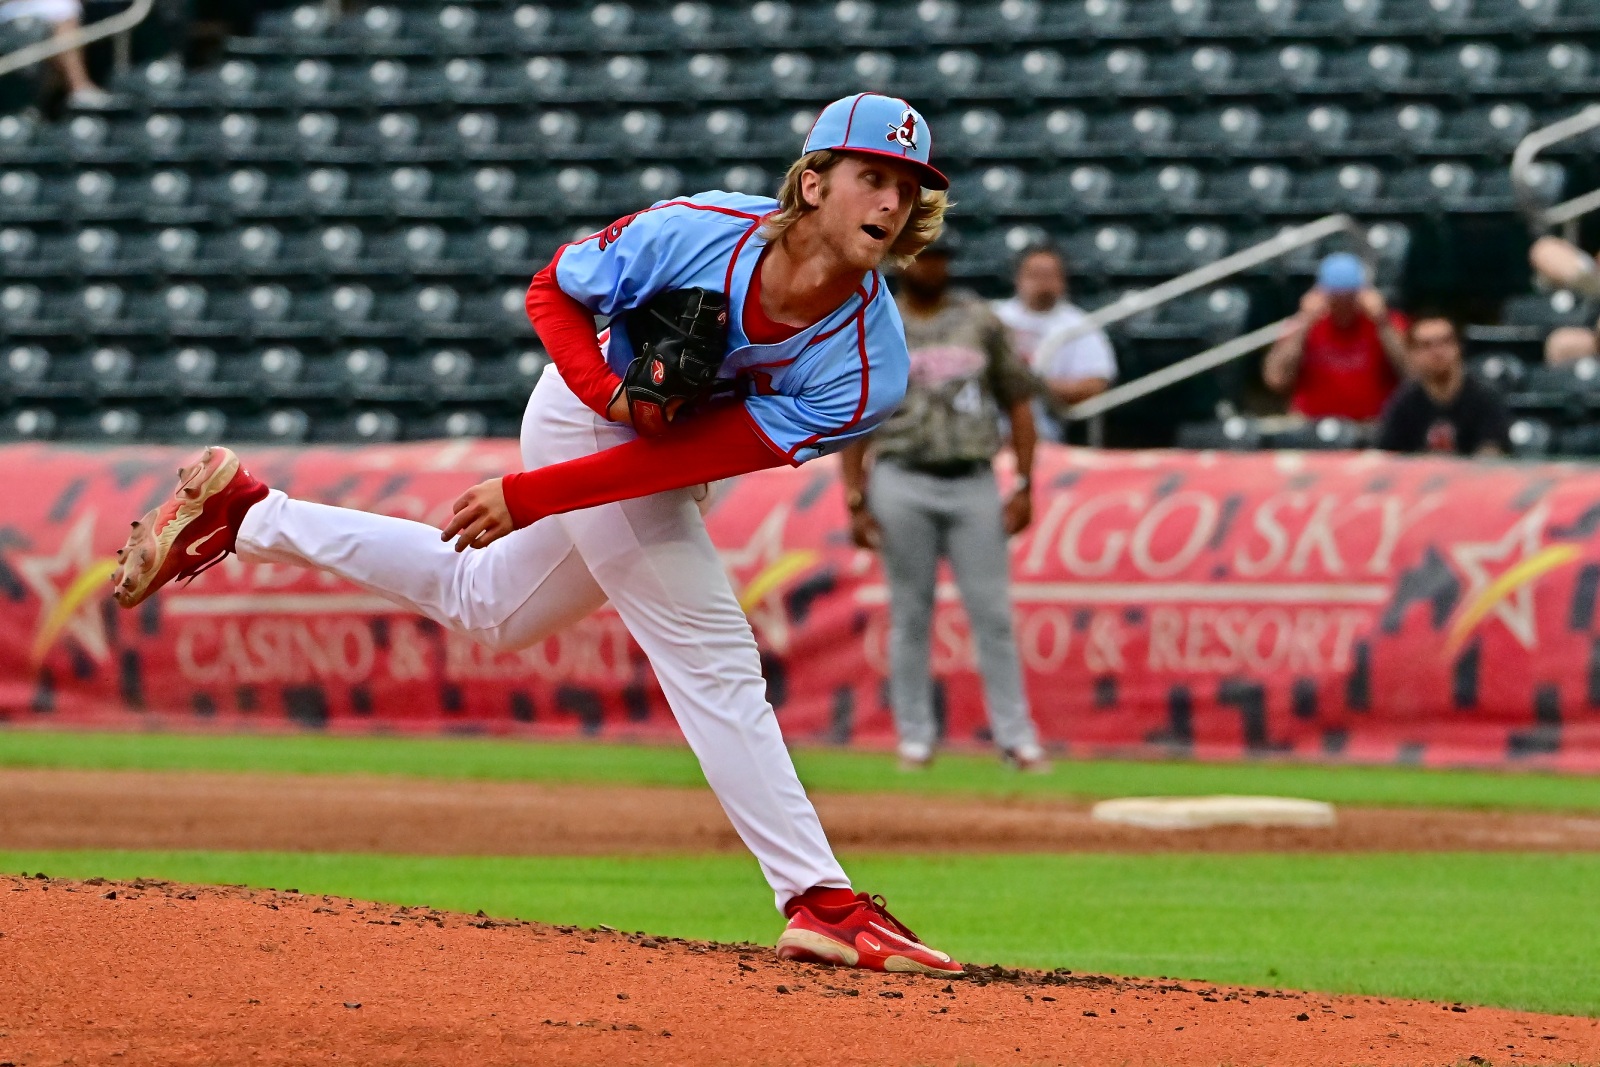 Quinn Mathews, wearing a Springfield Cardinals uniform, pitches the baseball during a game at Hammons Field